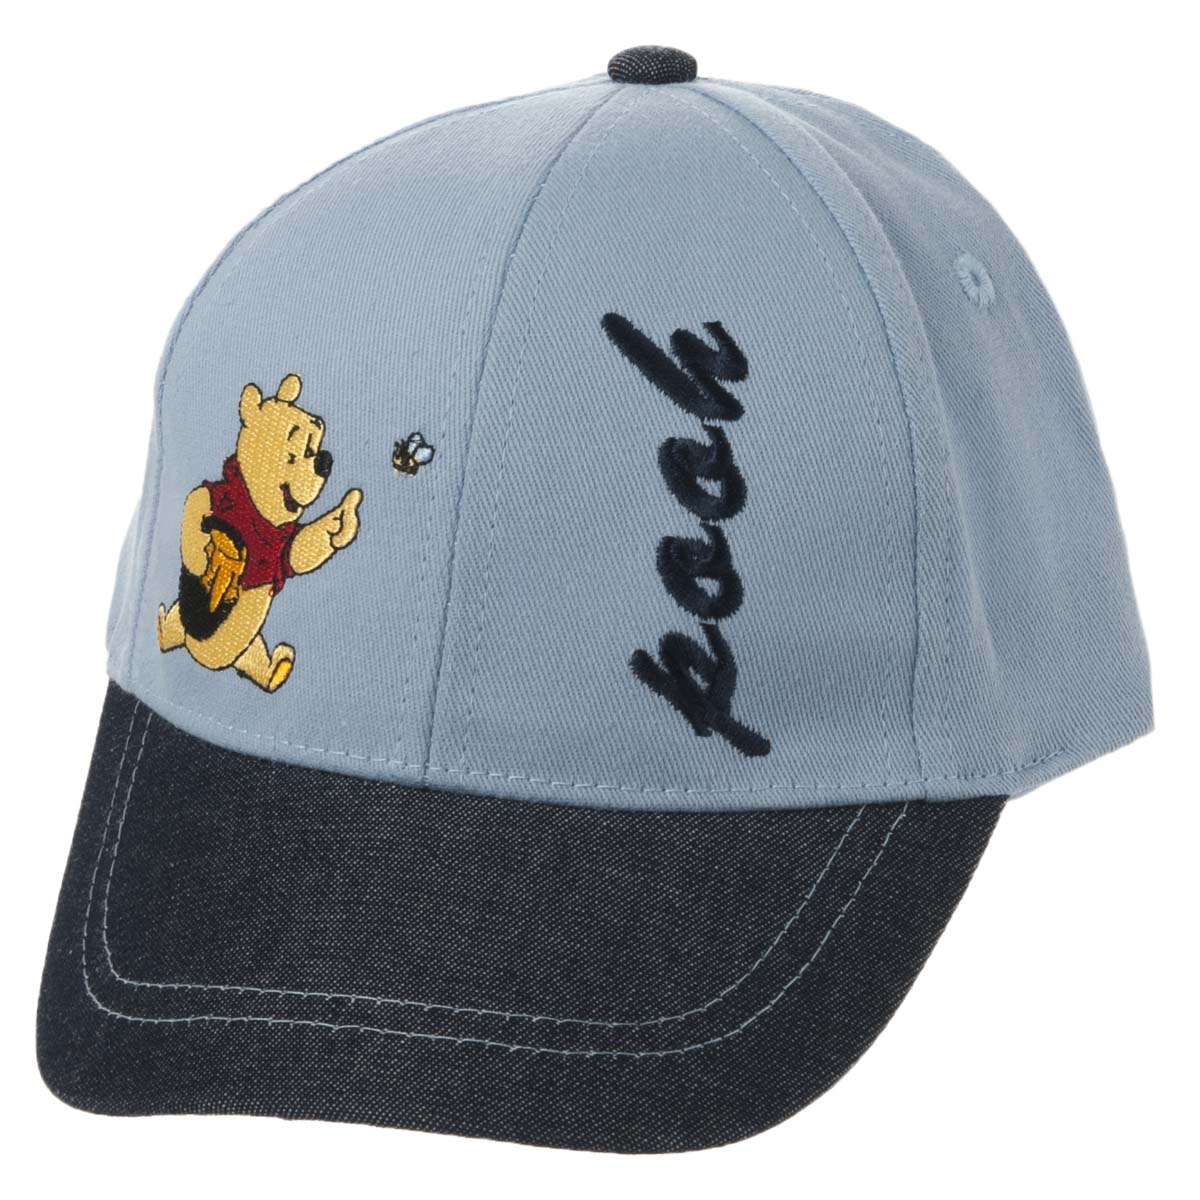 Win-nie The Pooh Unisex Breathable Beanie Caps for Children Creative Black 